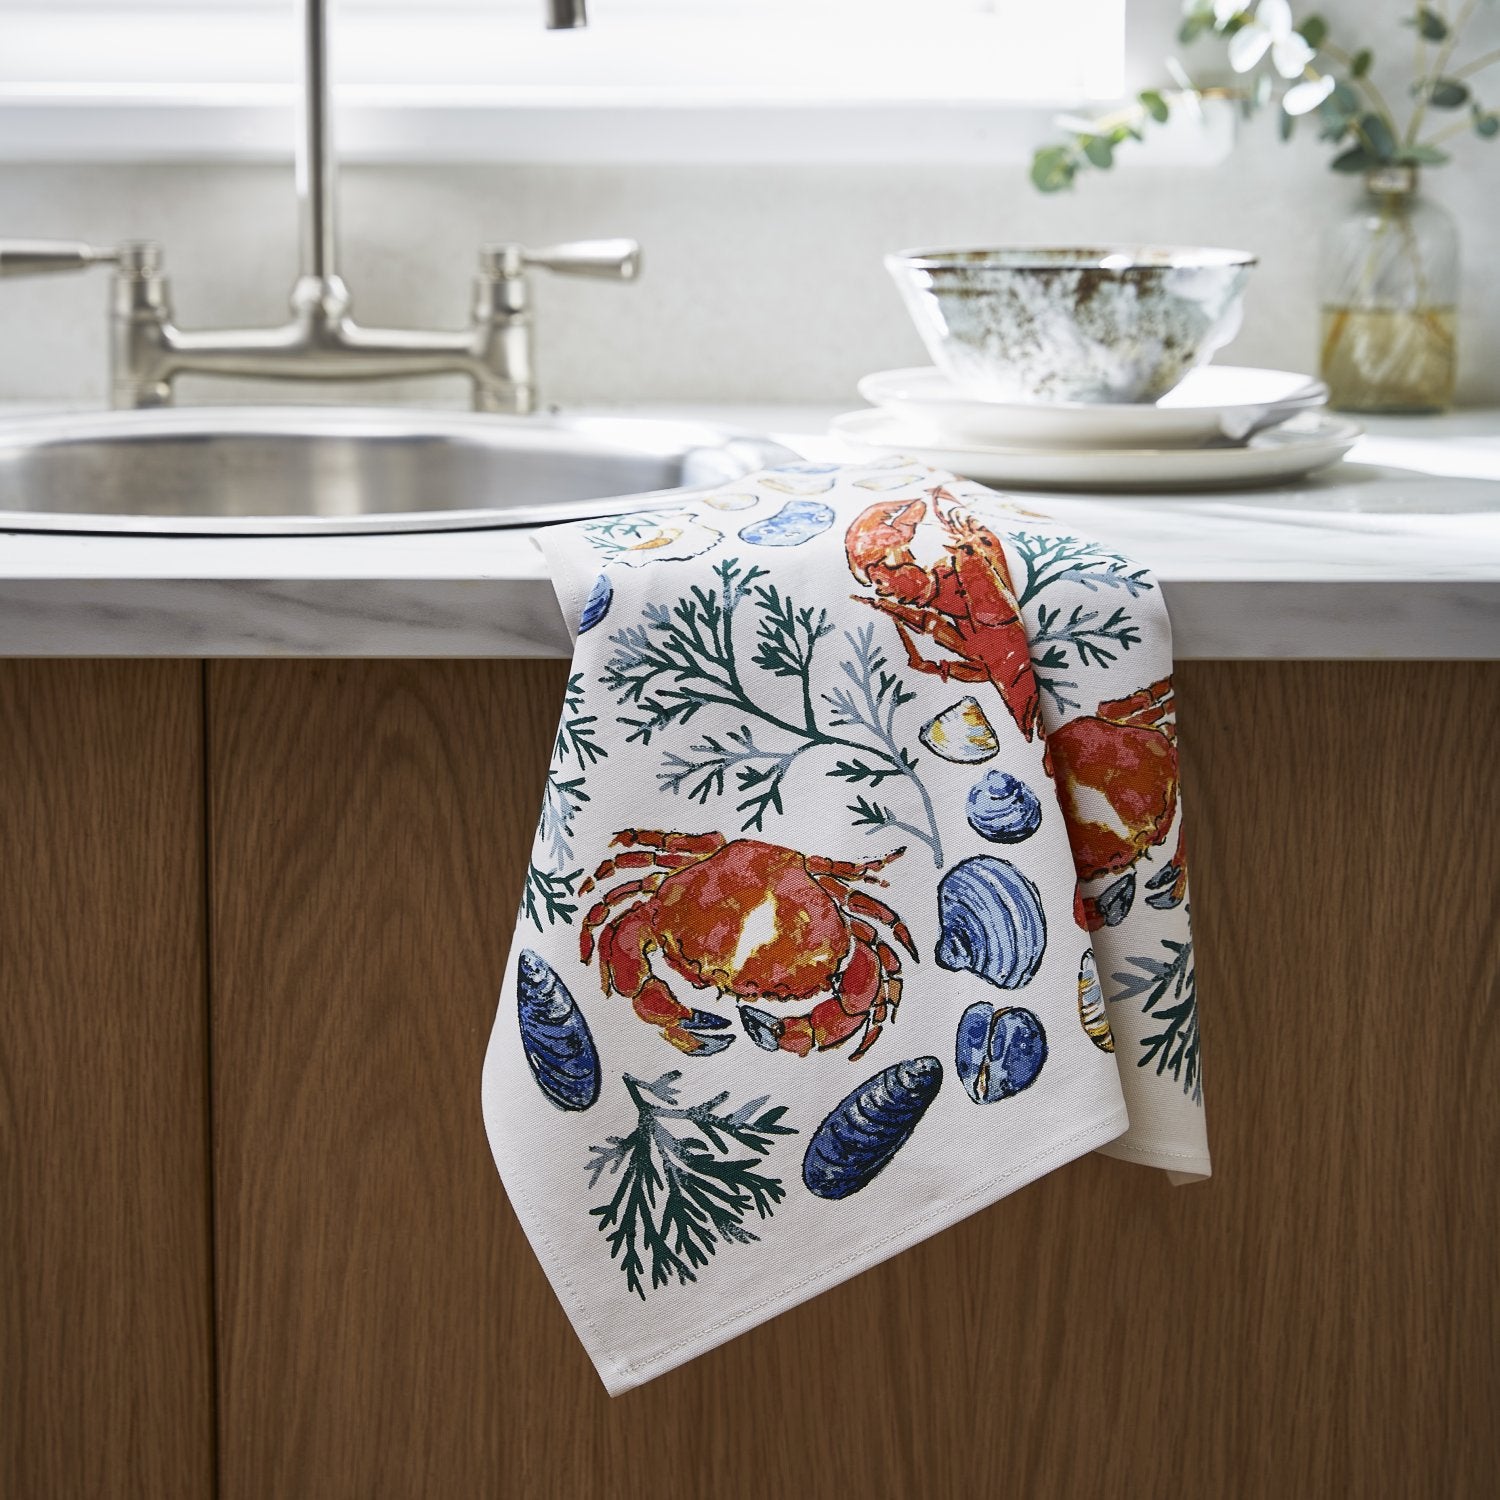 Ulster Weavers, "Shellfish", Printed cotton tea towel.